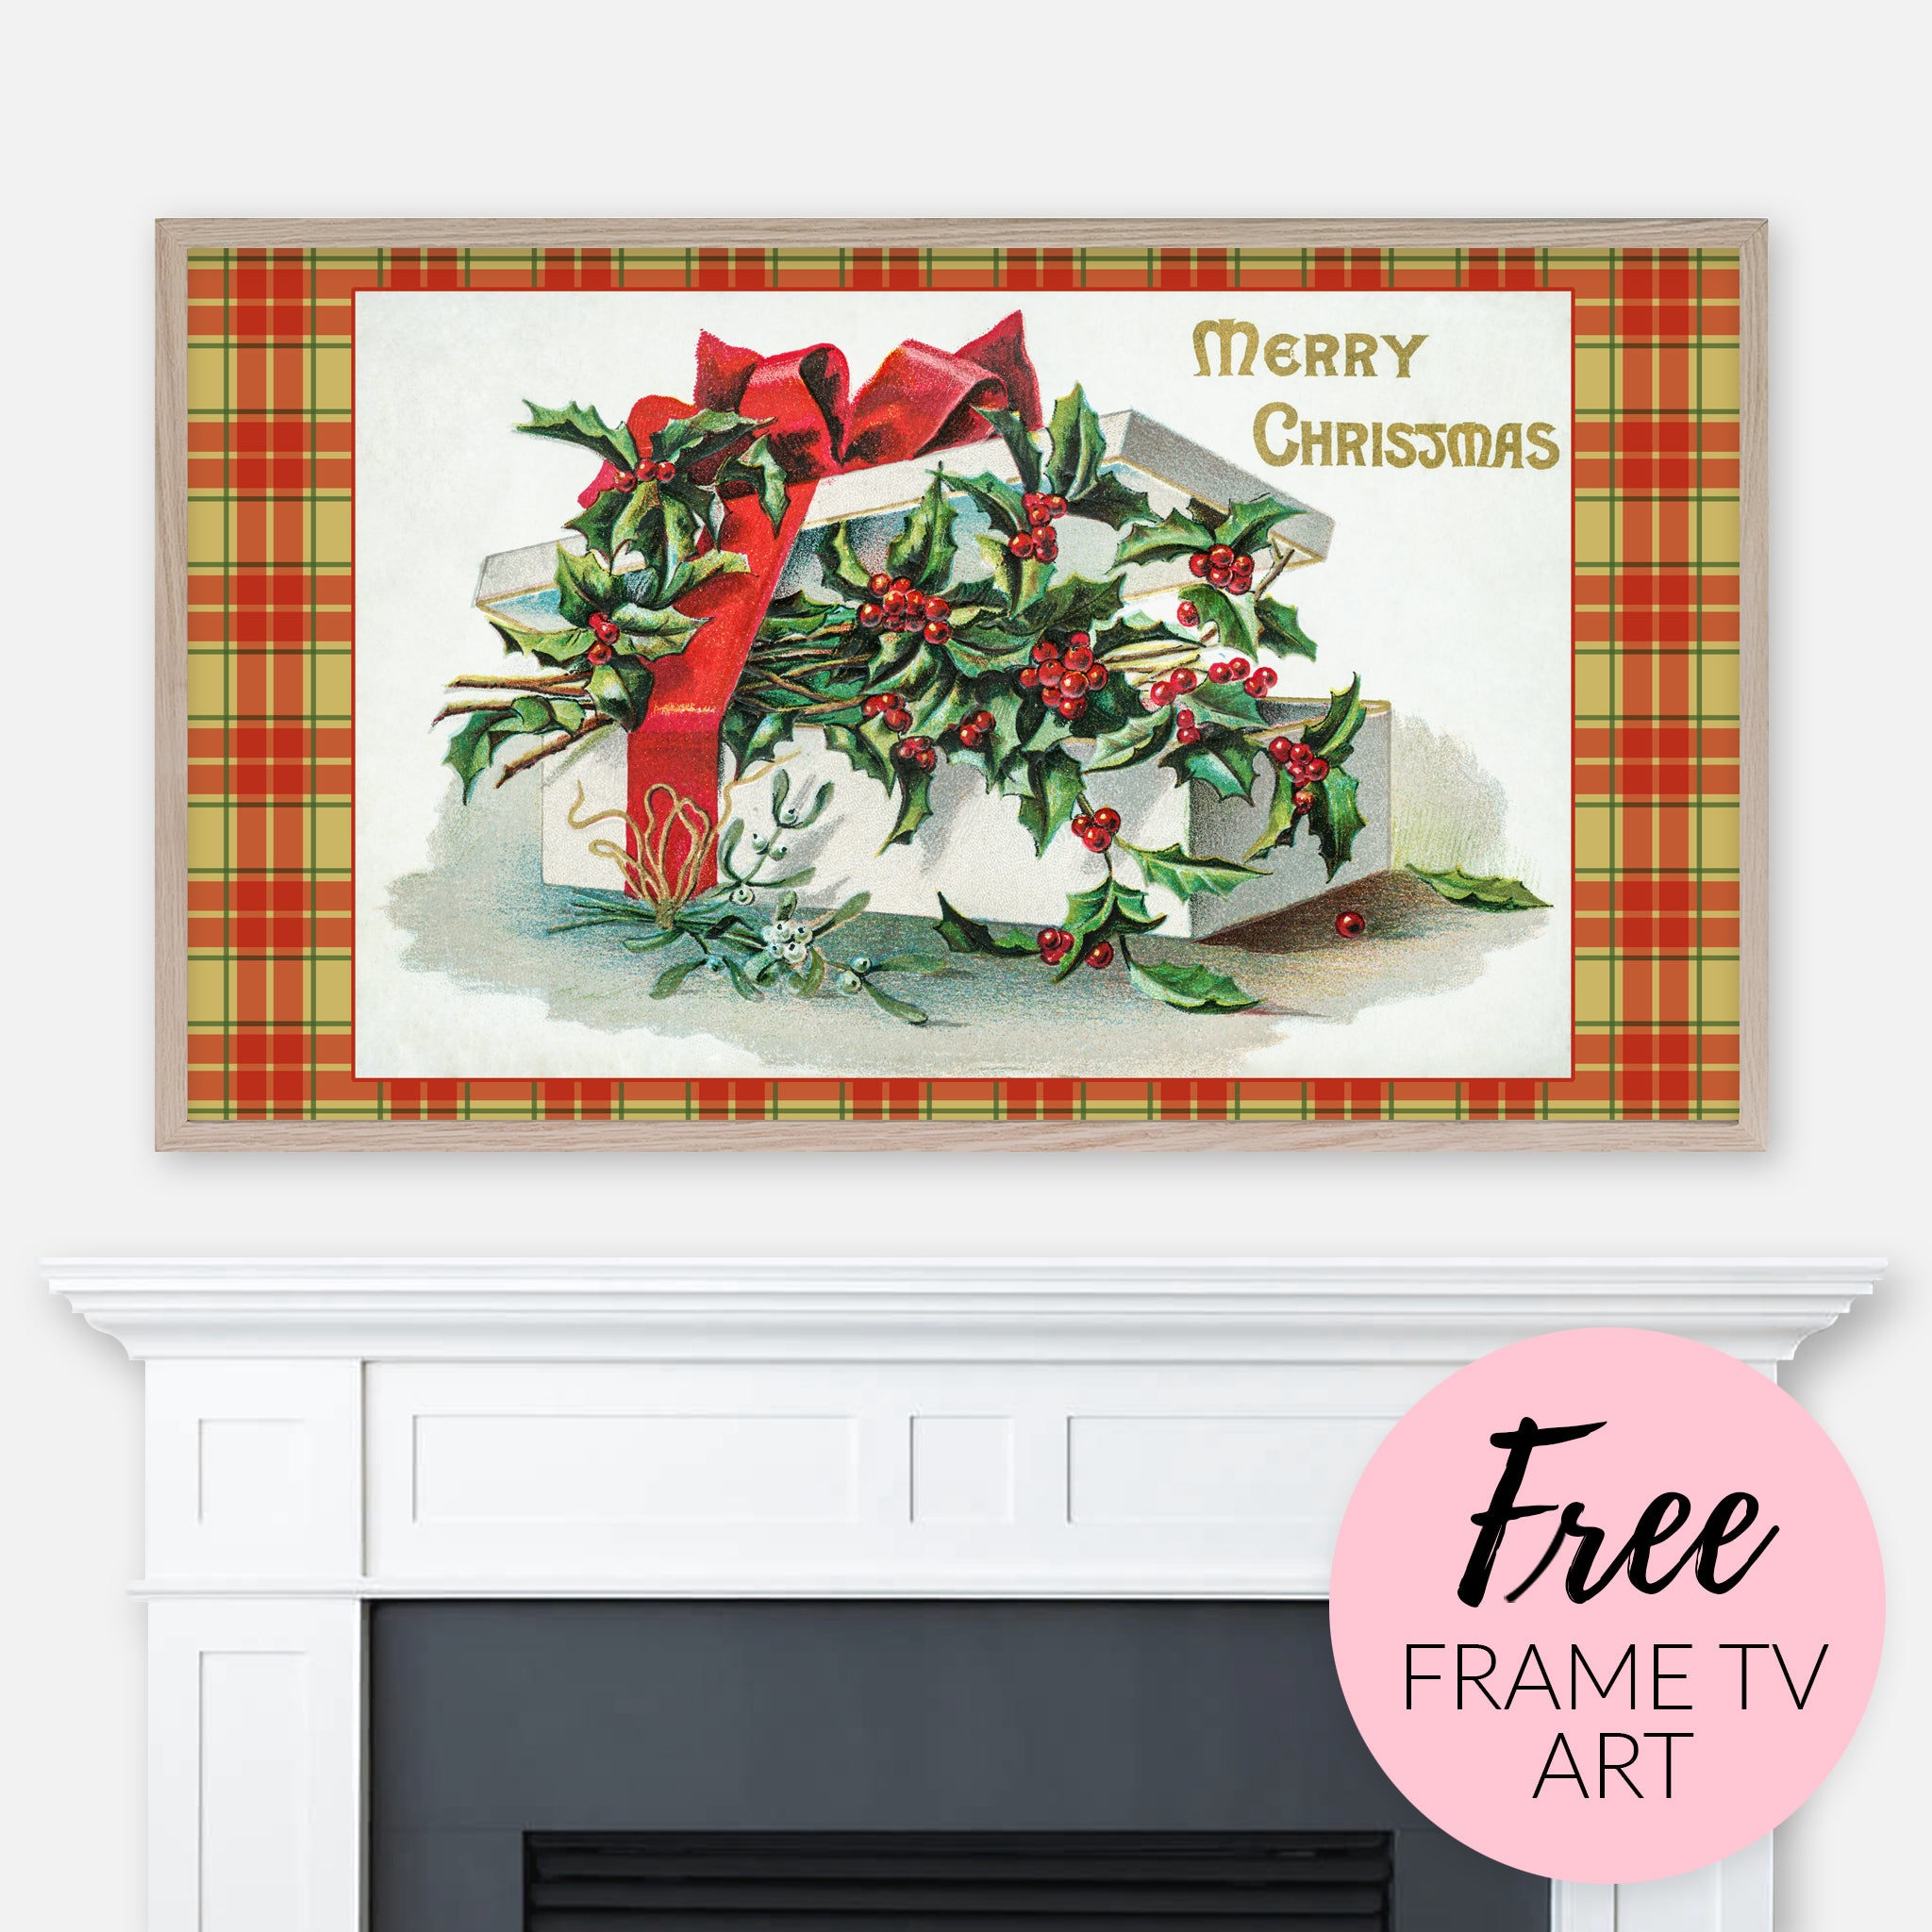 Free image for Samsung Frame TV - Vintage Christmas Card on Festive Plaid Background displayed above fireplace